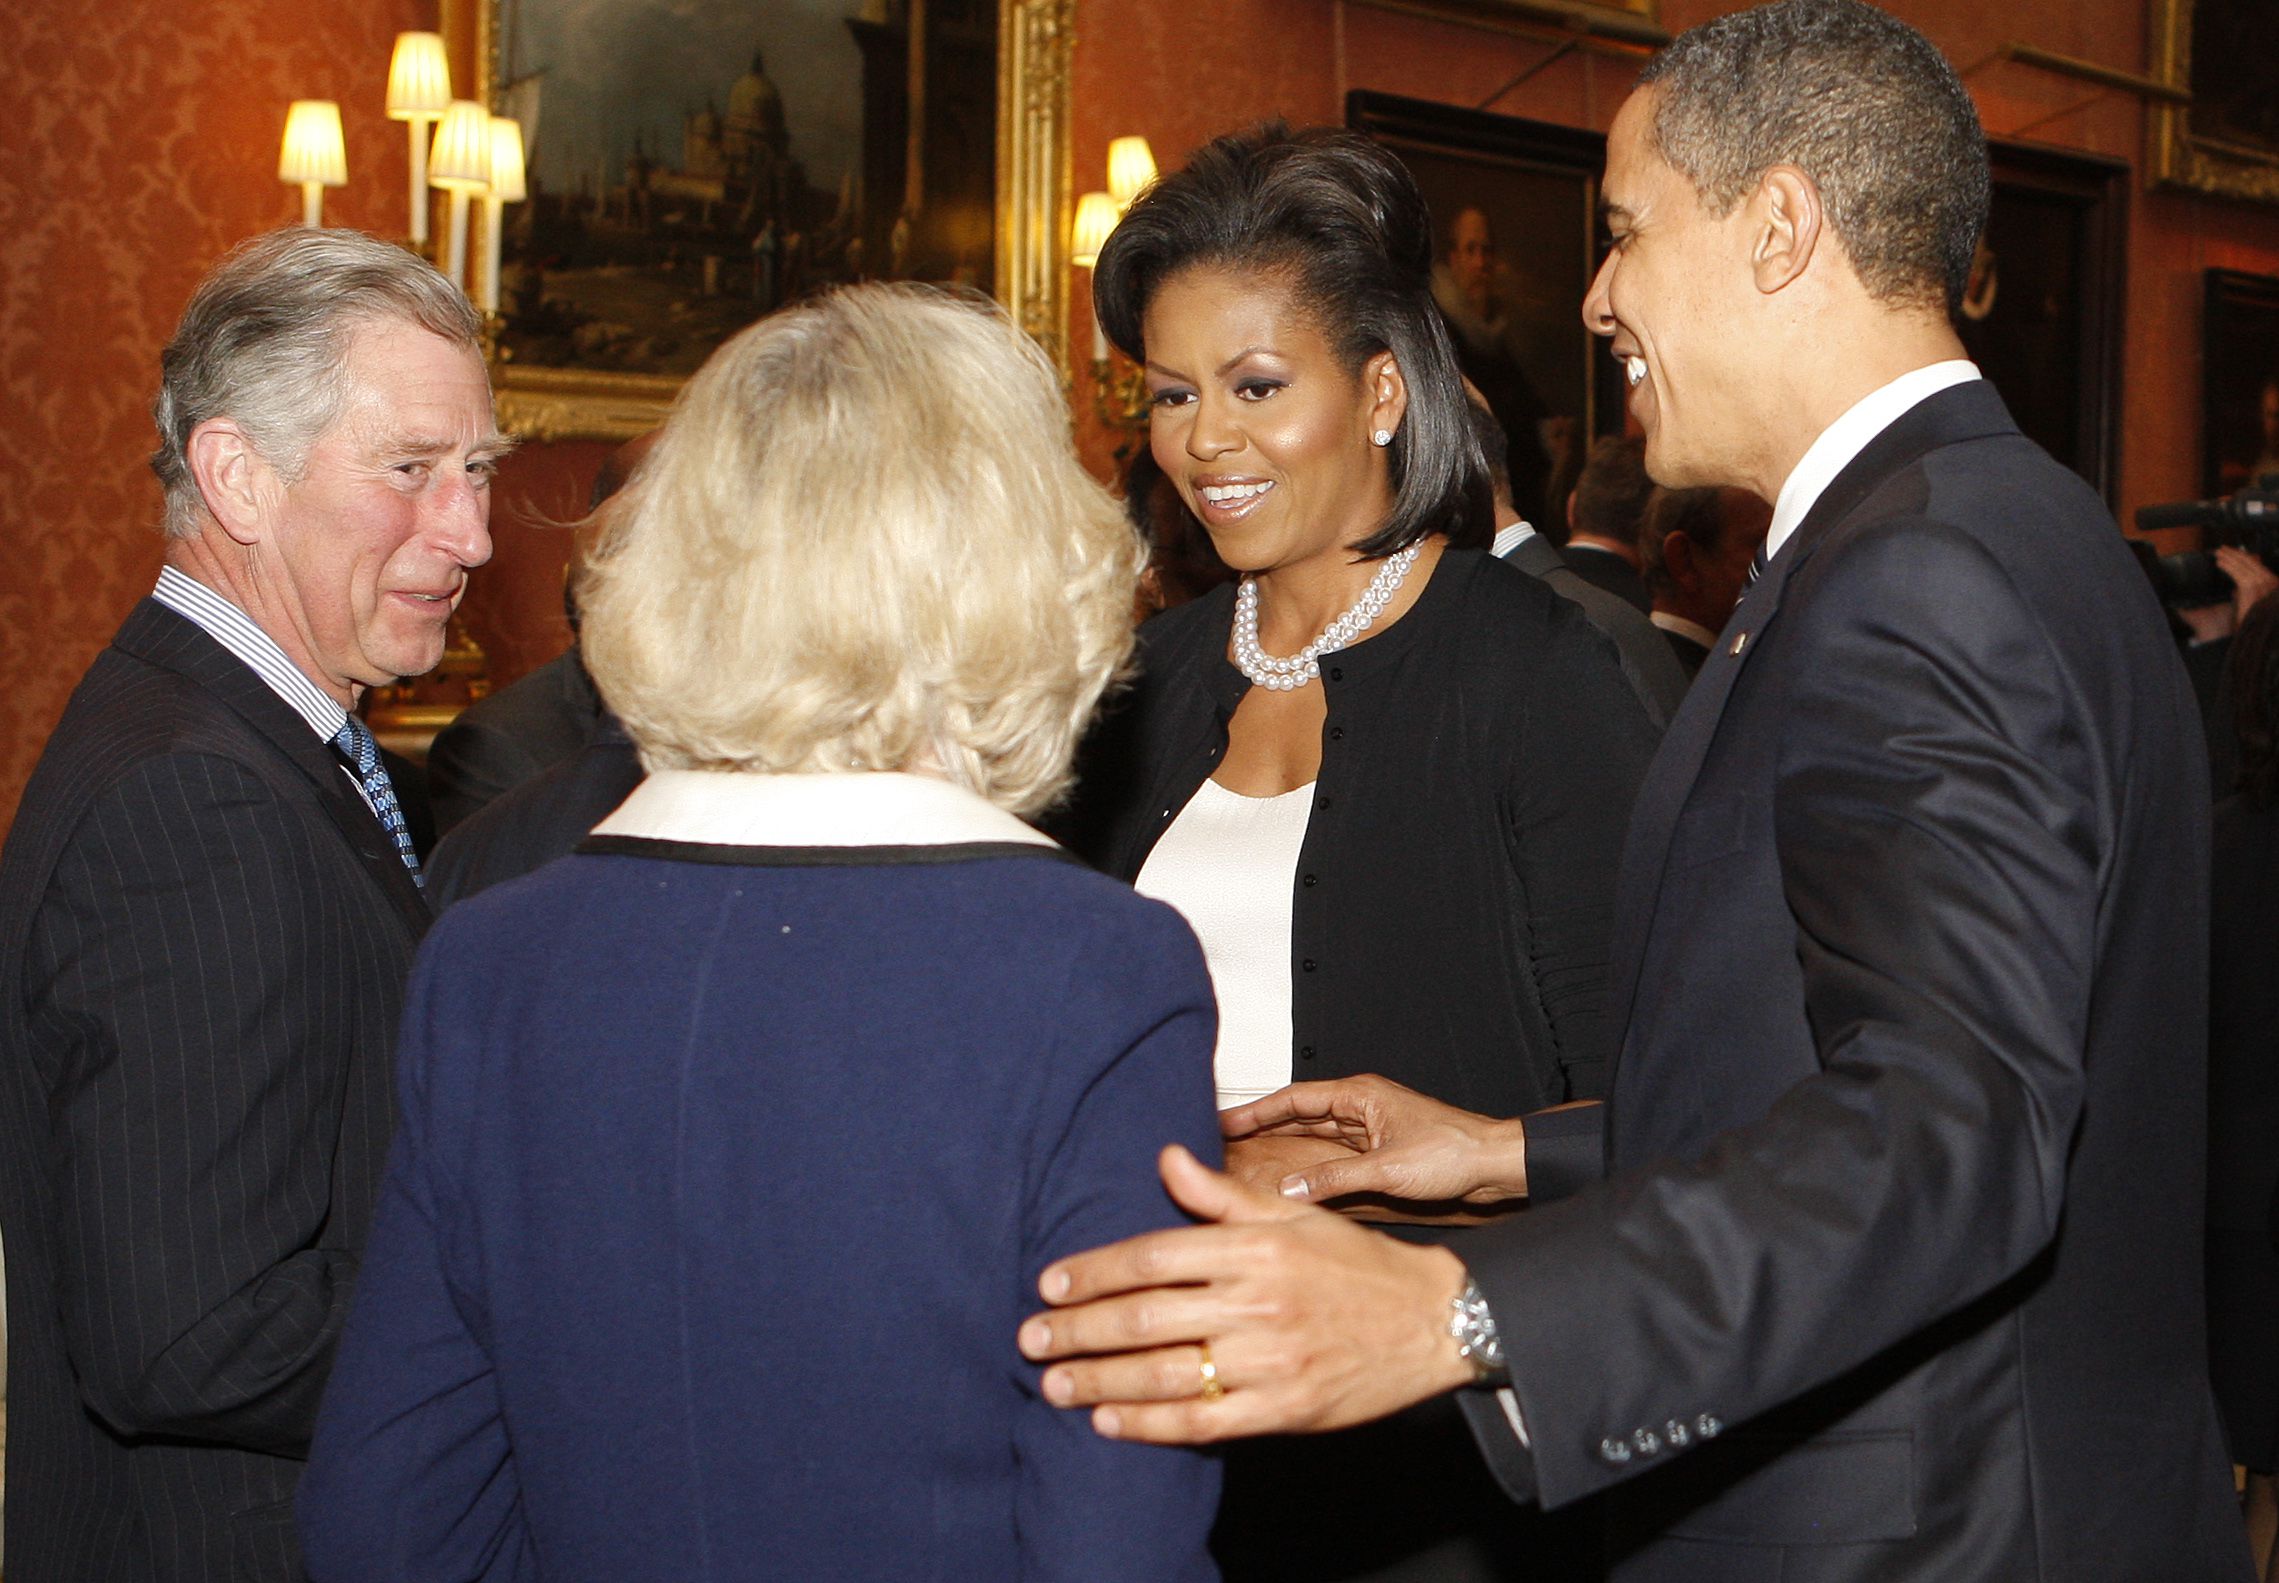 Prince Charles and Camilla, Duchess of Cornwall, Barack Obama, Michelle Obama